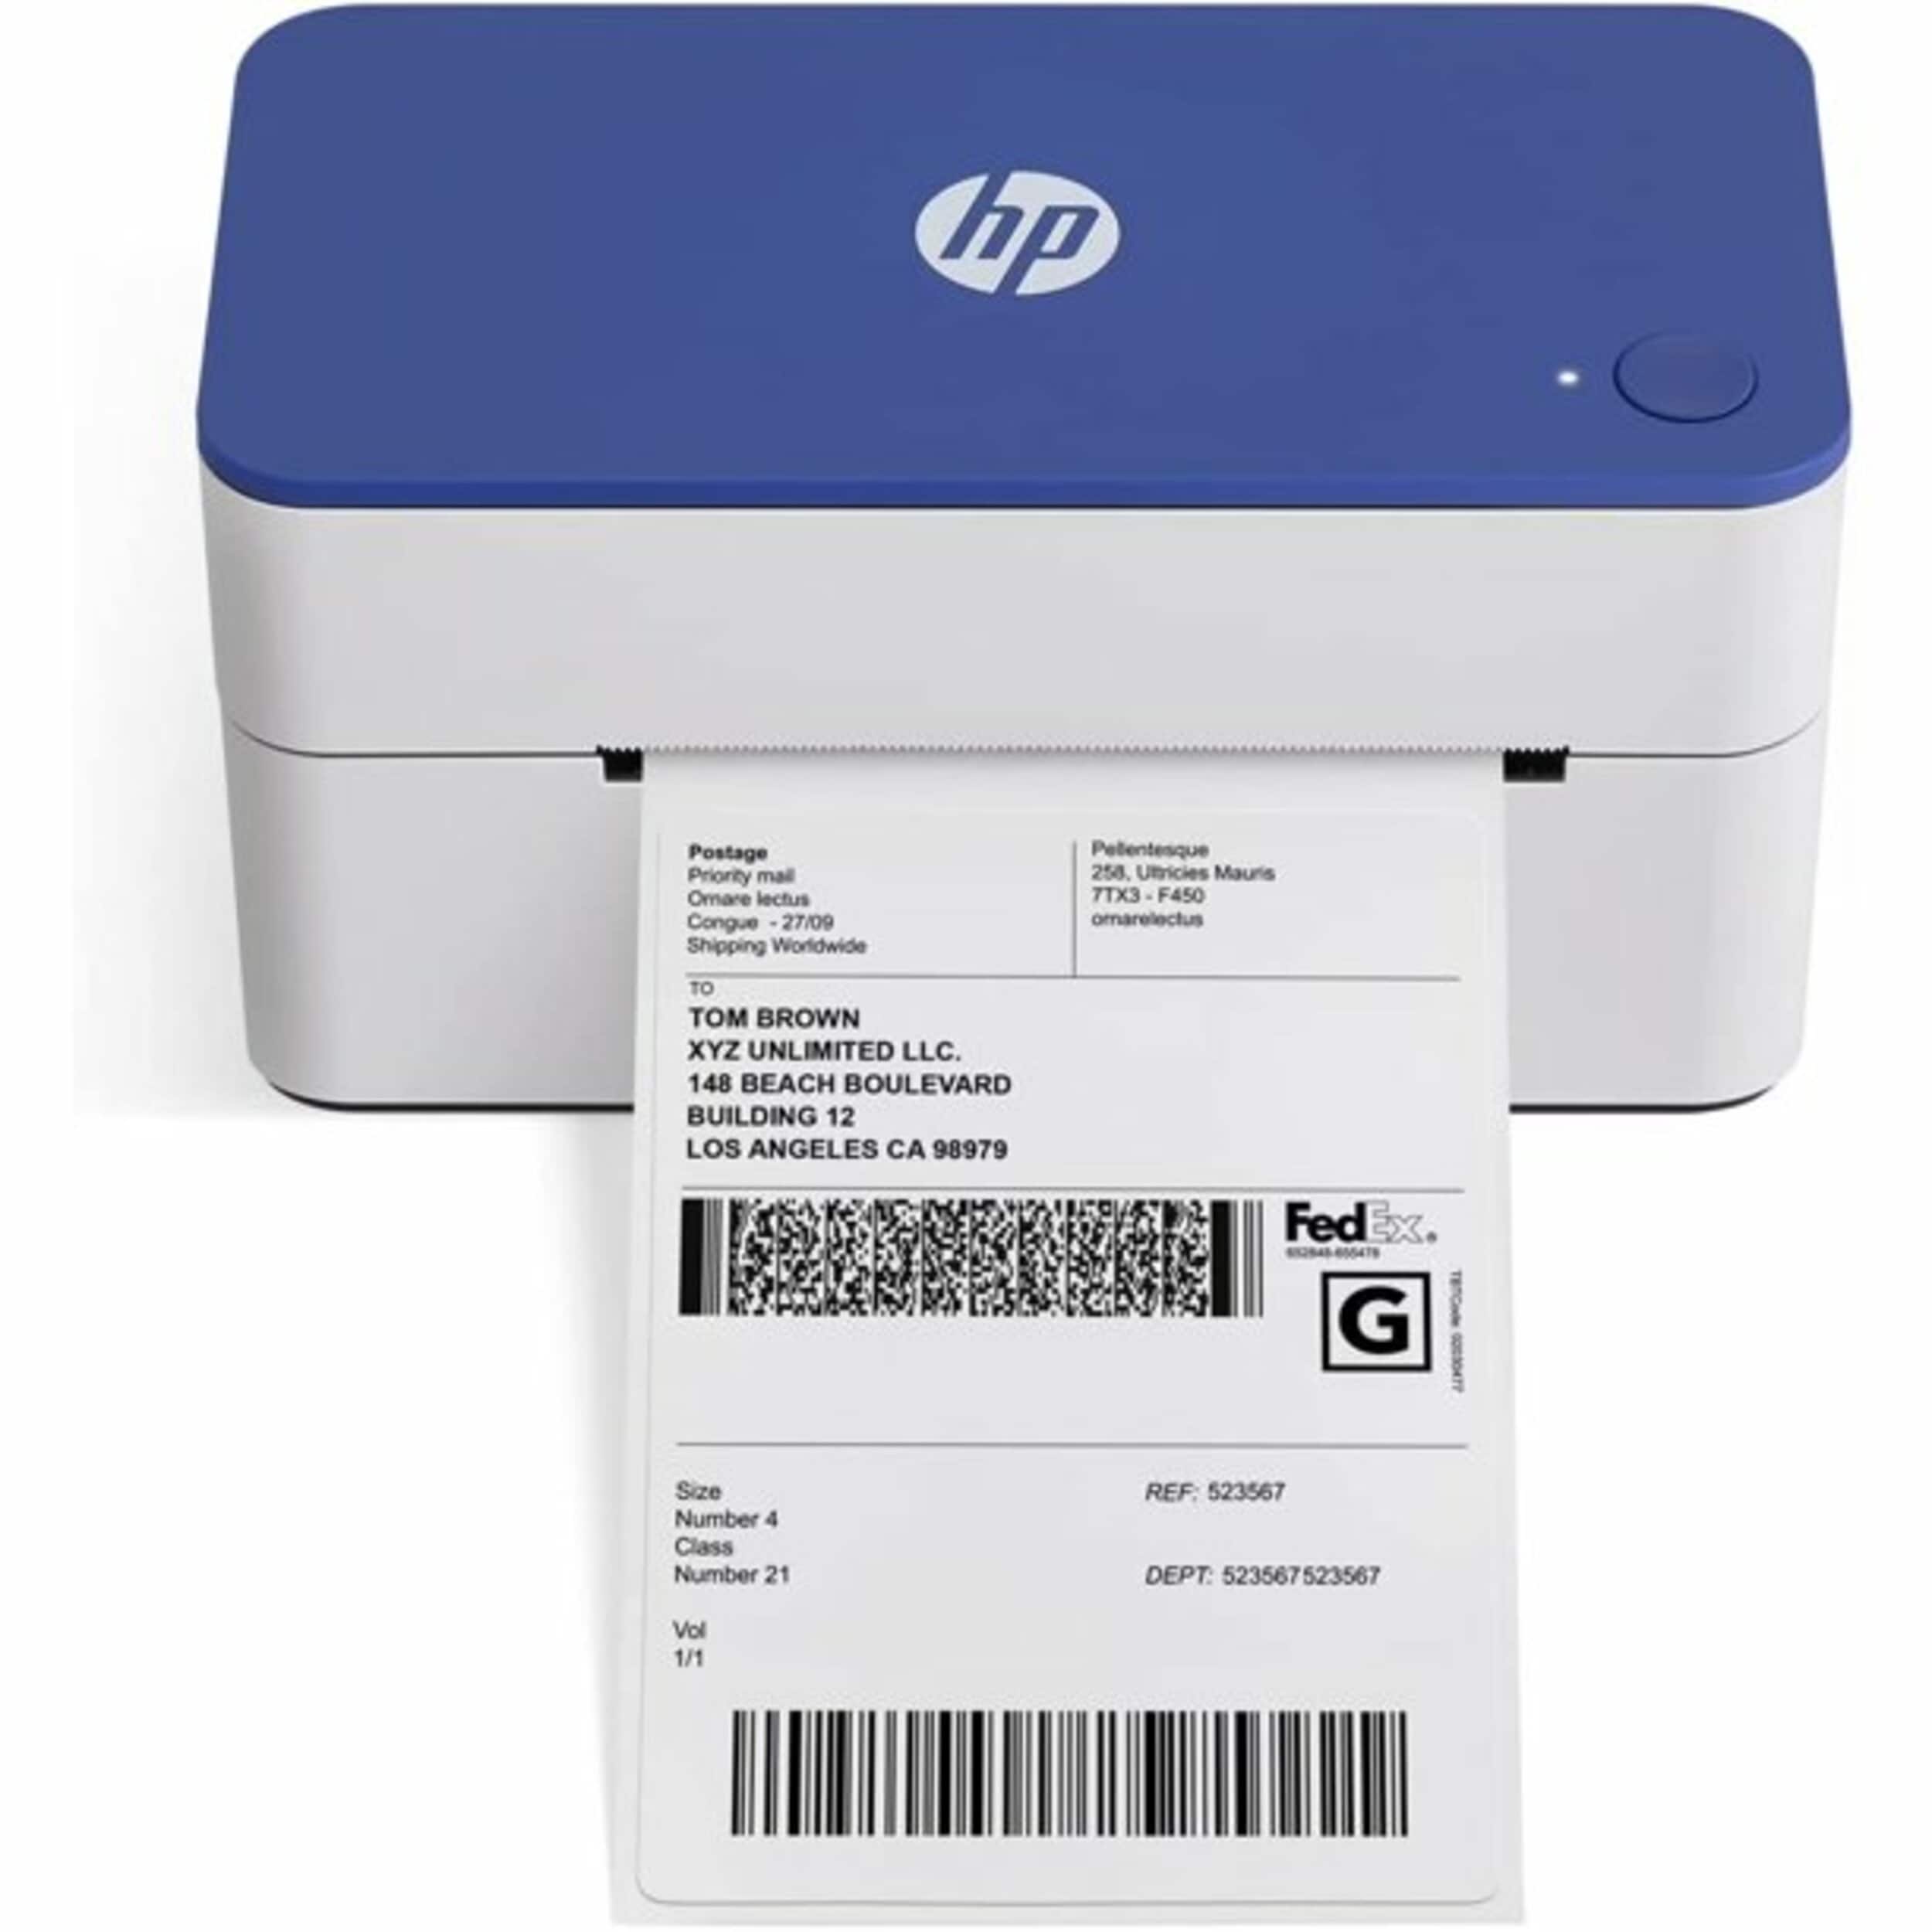 HP HP Shipping Label Printer, 4x6 Thermal Label Printer, 203 DPI